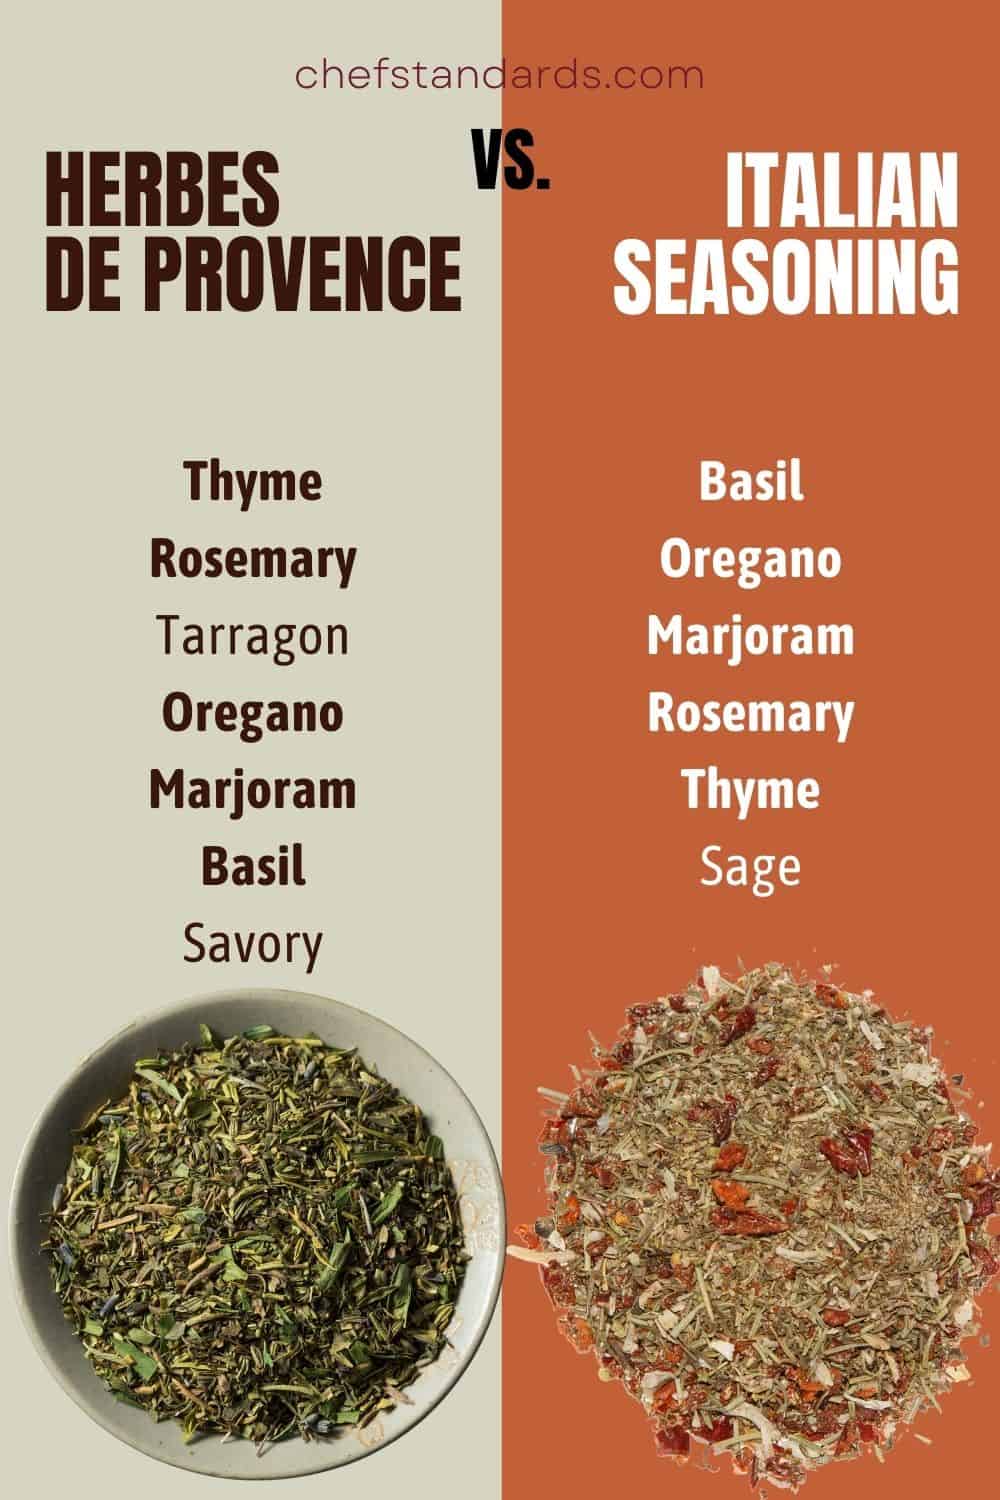 HERBES DE PROVENCE vs. Italian seasoning